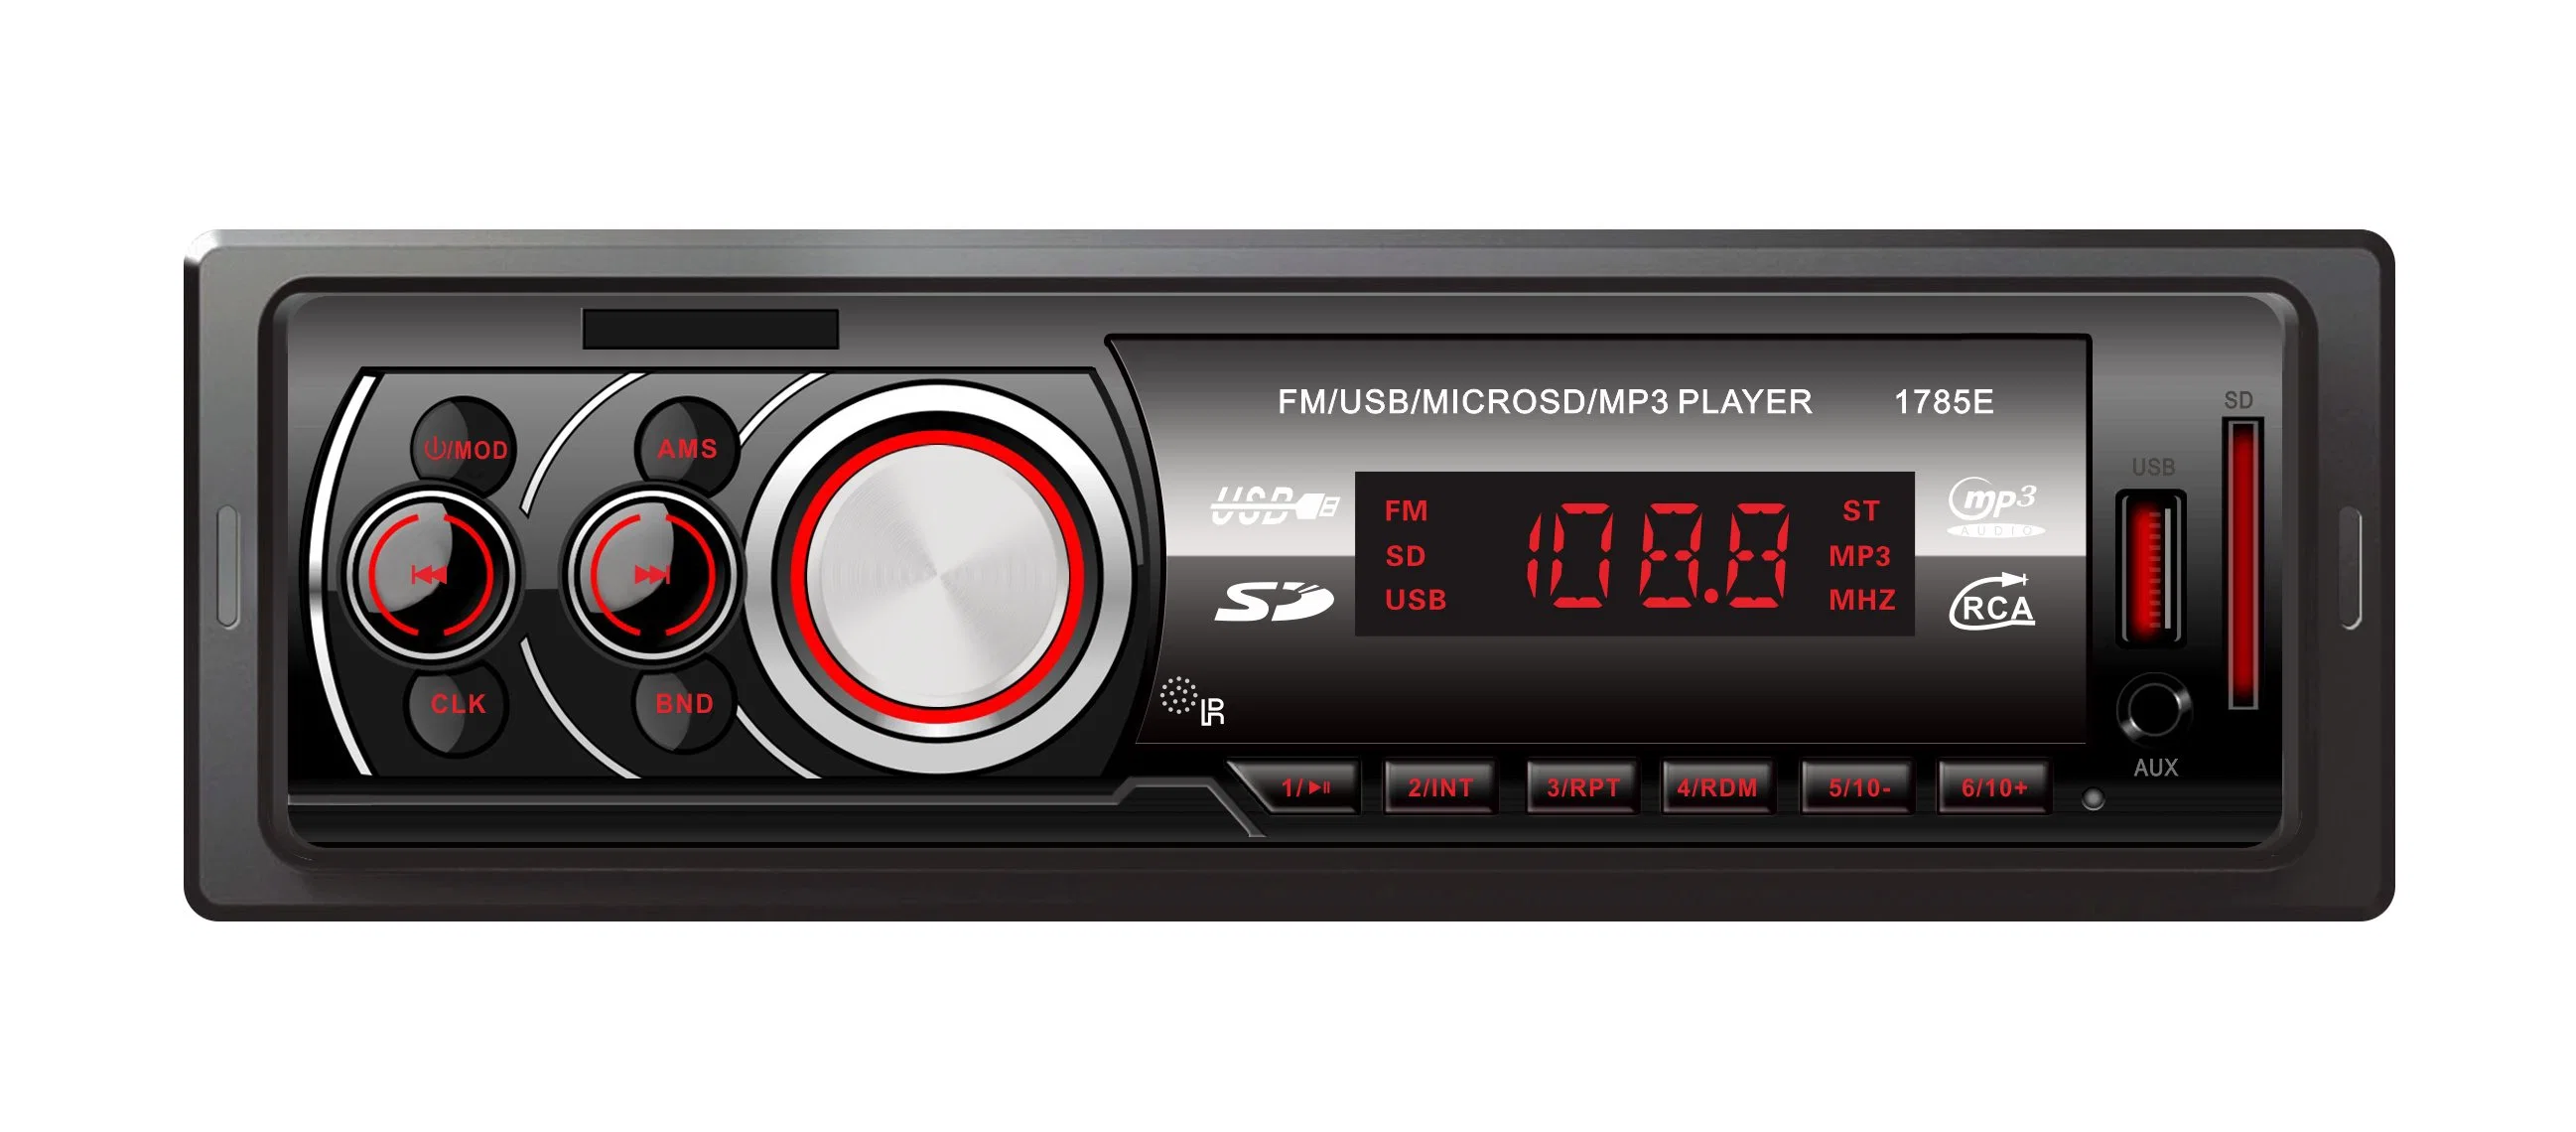 Receptor multimédia digital eletrônica Car Audio Player